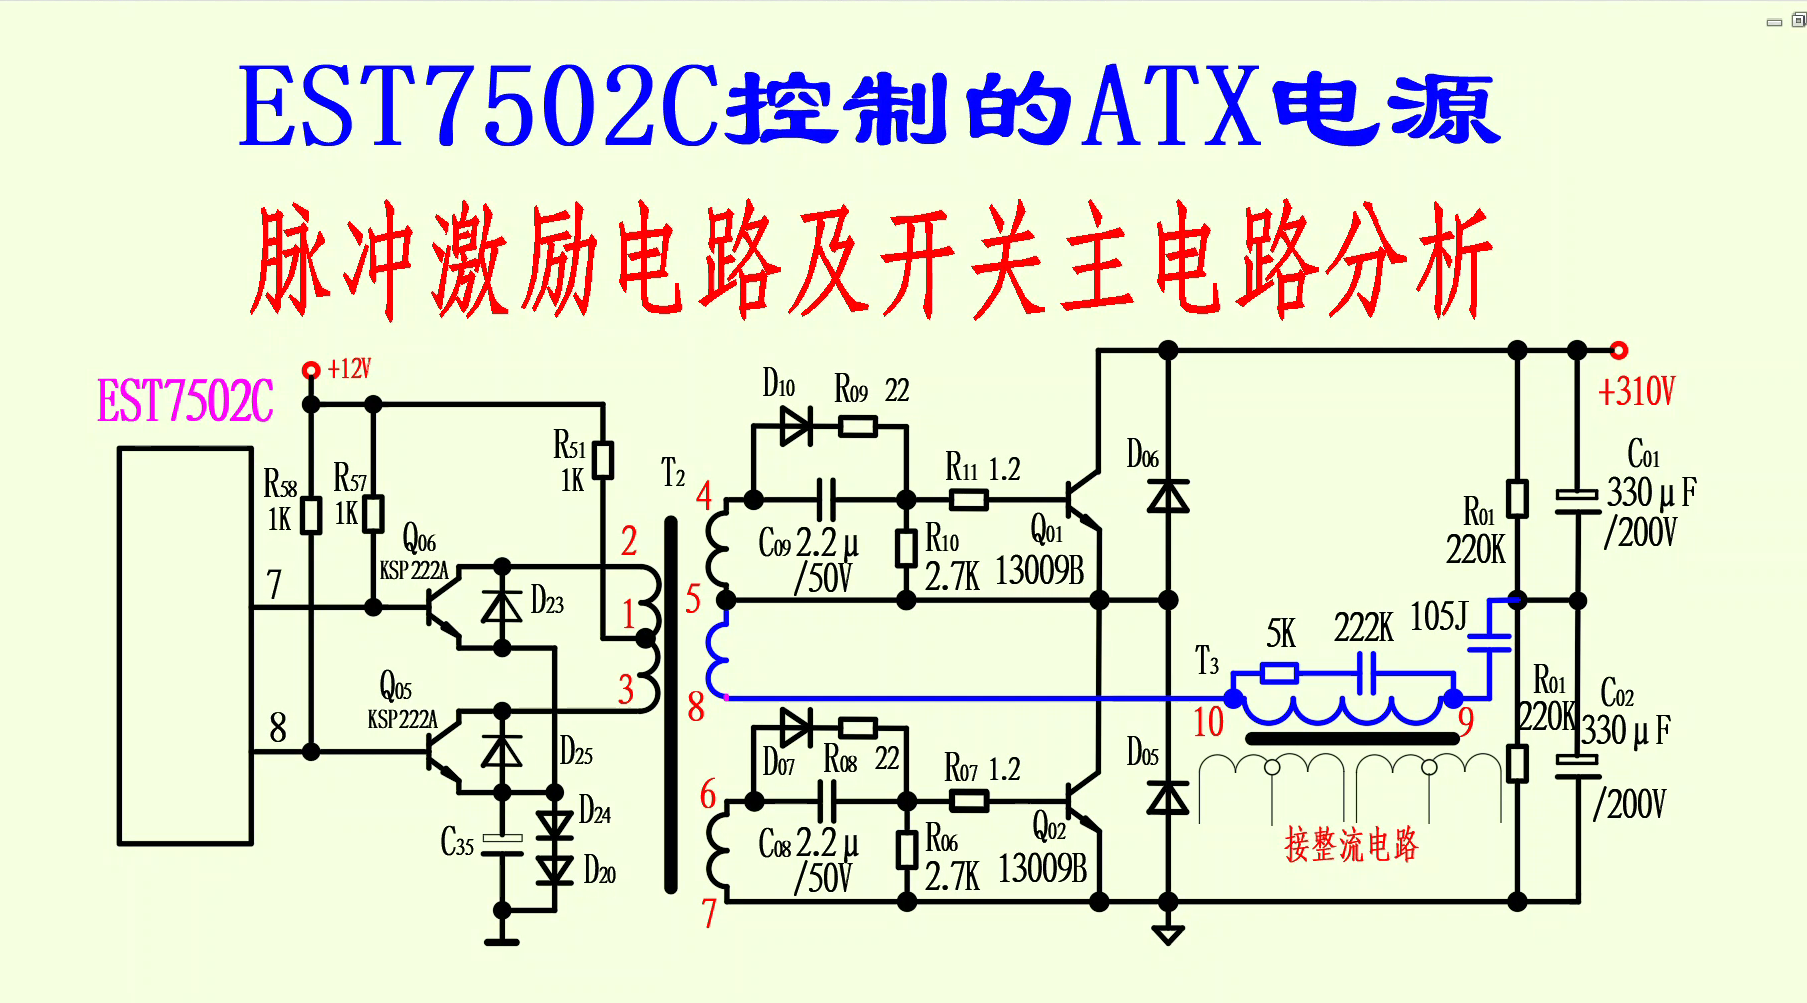 EST7502C控制的ATX電源—推挽激勵及半橋式主開關電路